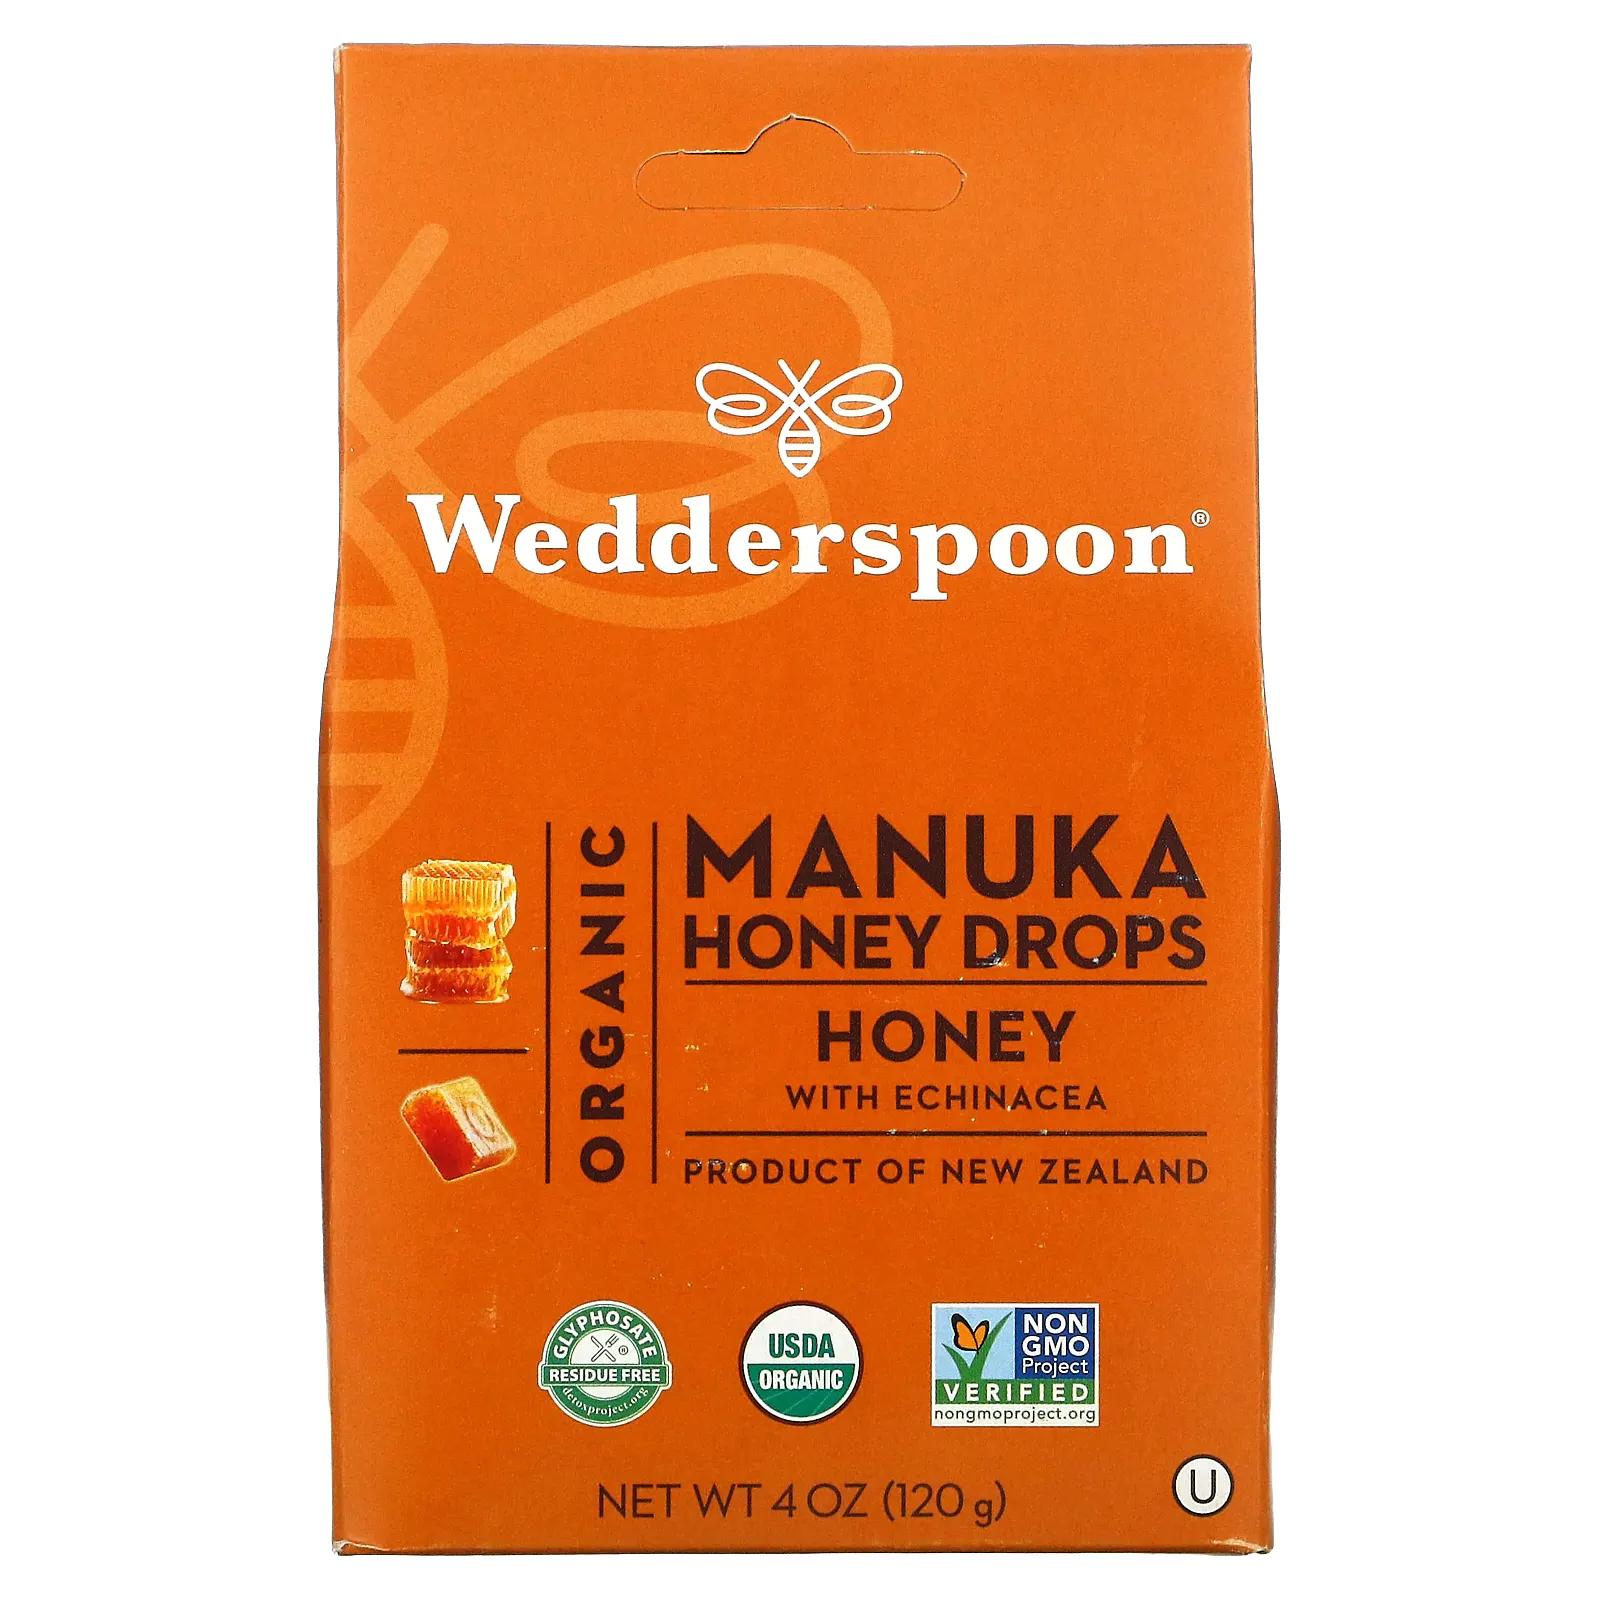 Wedderspoon Organic Manuka Honey Drops Honey with Echinacea 4 oz (120 g)